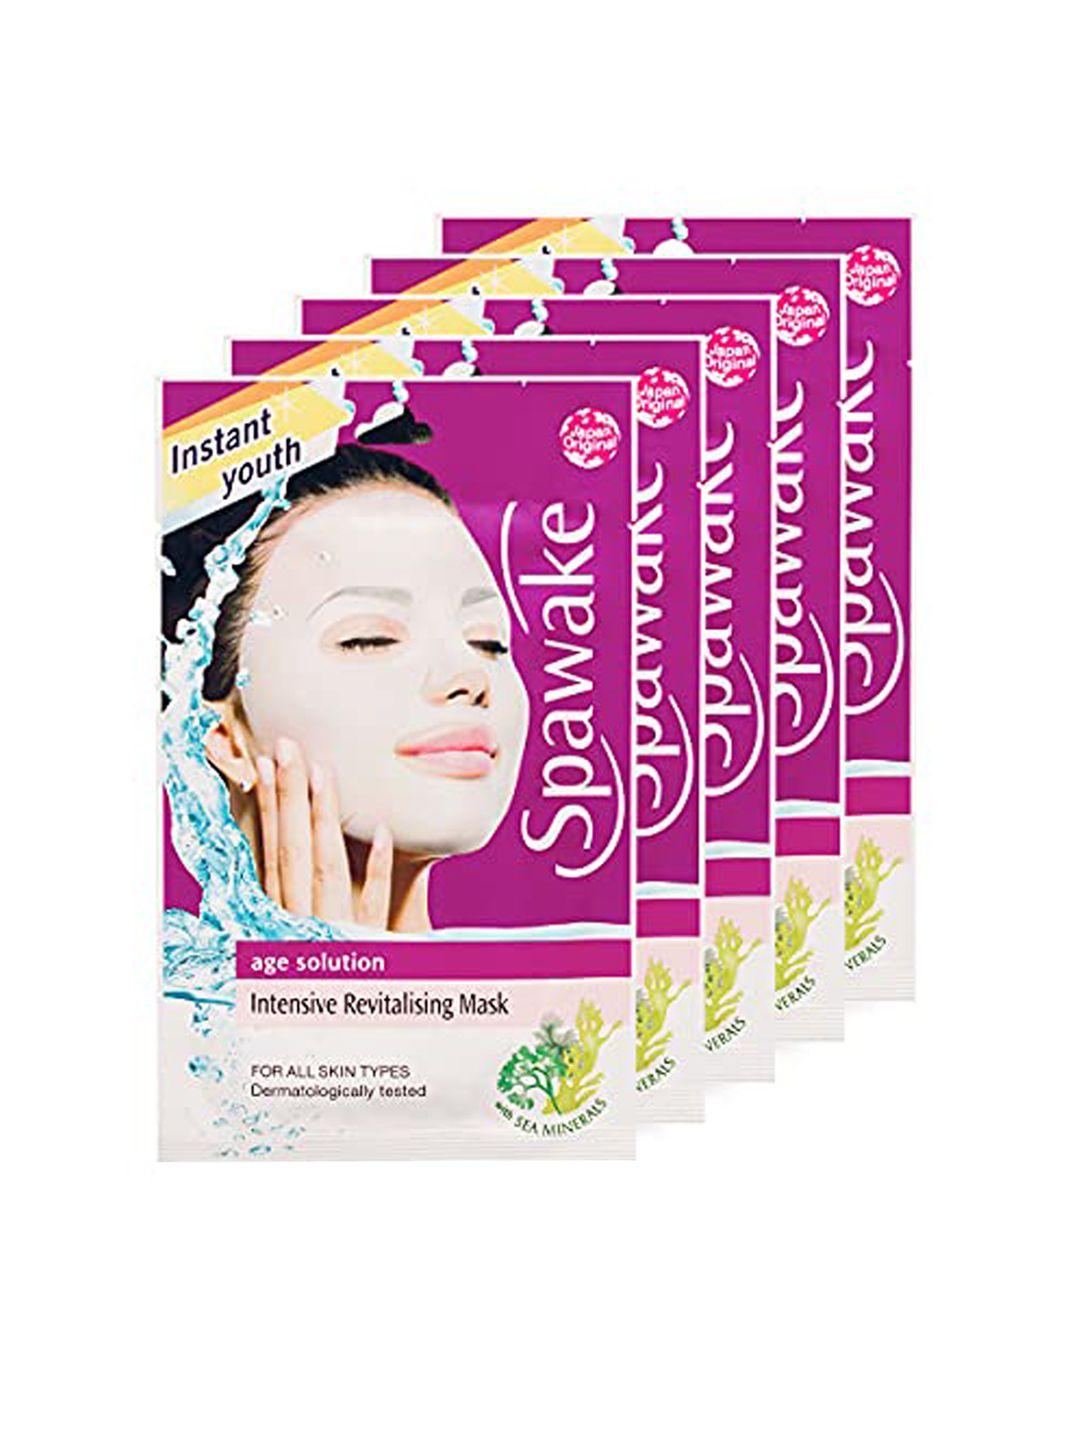 spawake set of 5 age solution intensive revitalising face sheet mask - 18 ml each